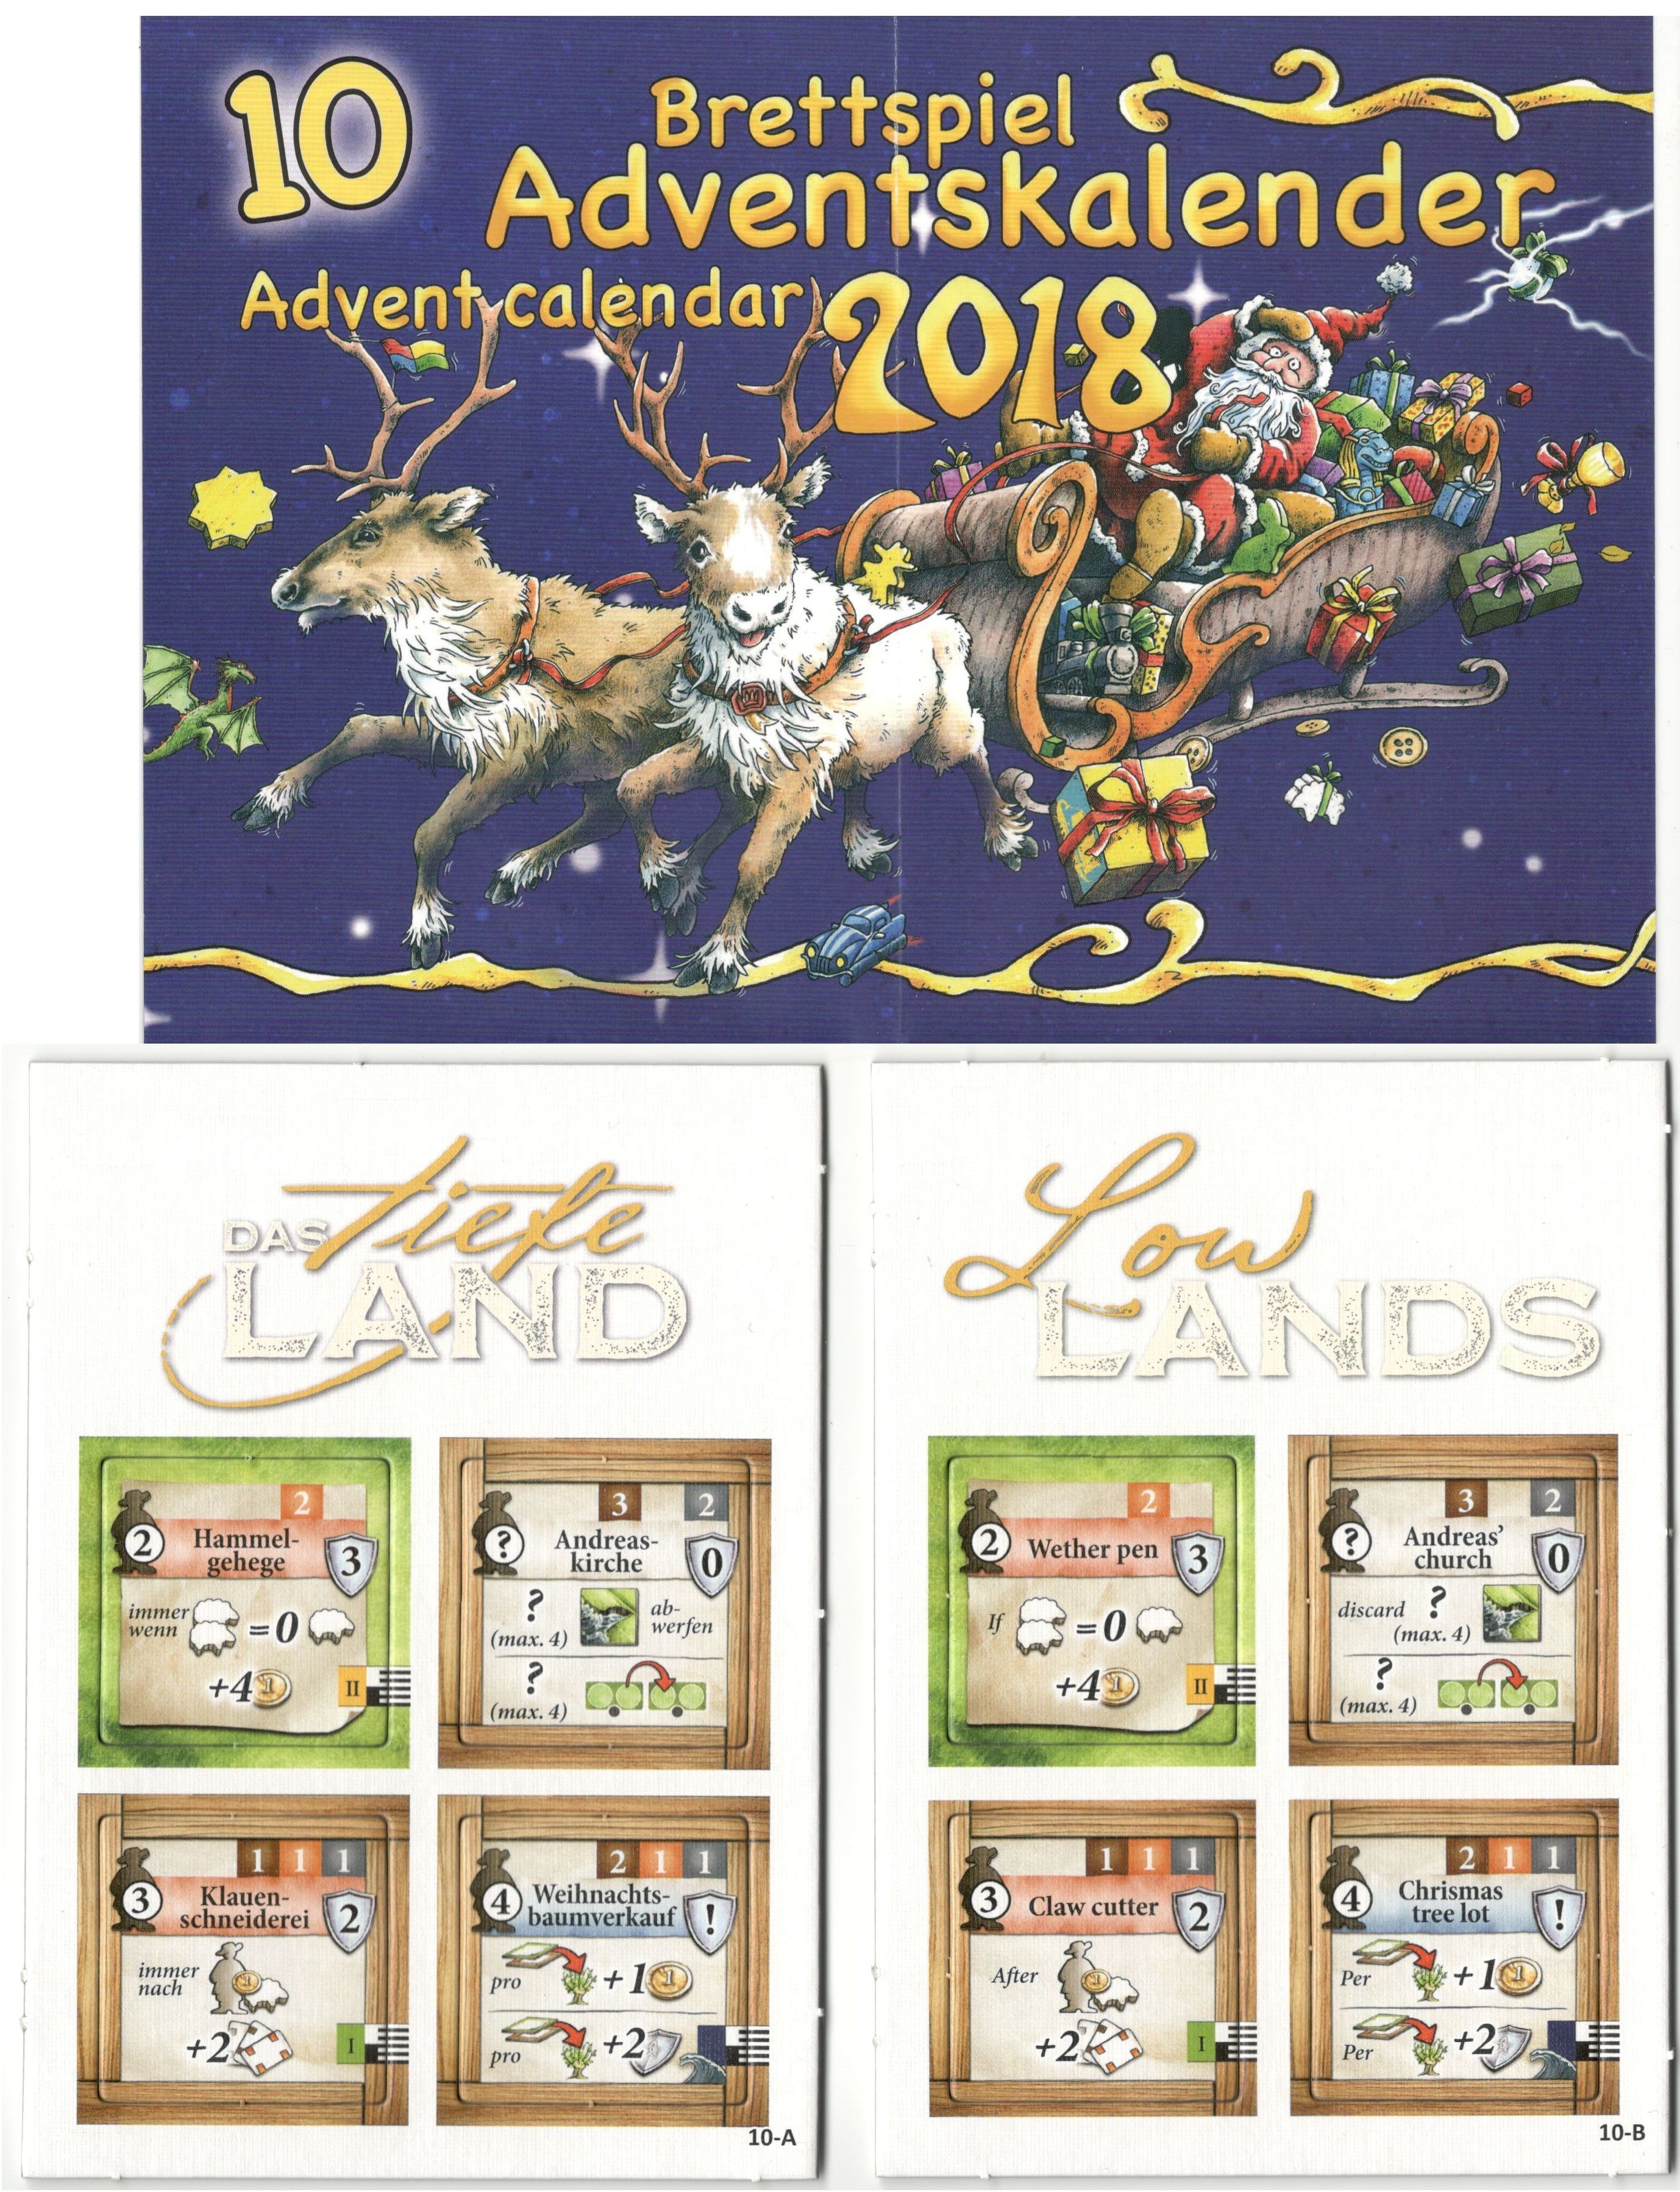 Lowlands: Brettspiel Adventskalender 2018 Promo